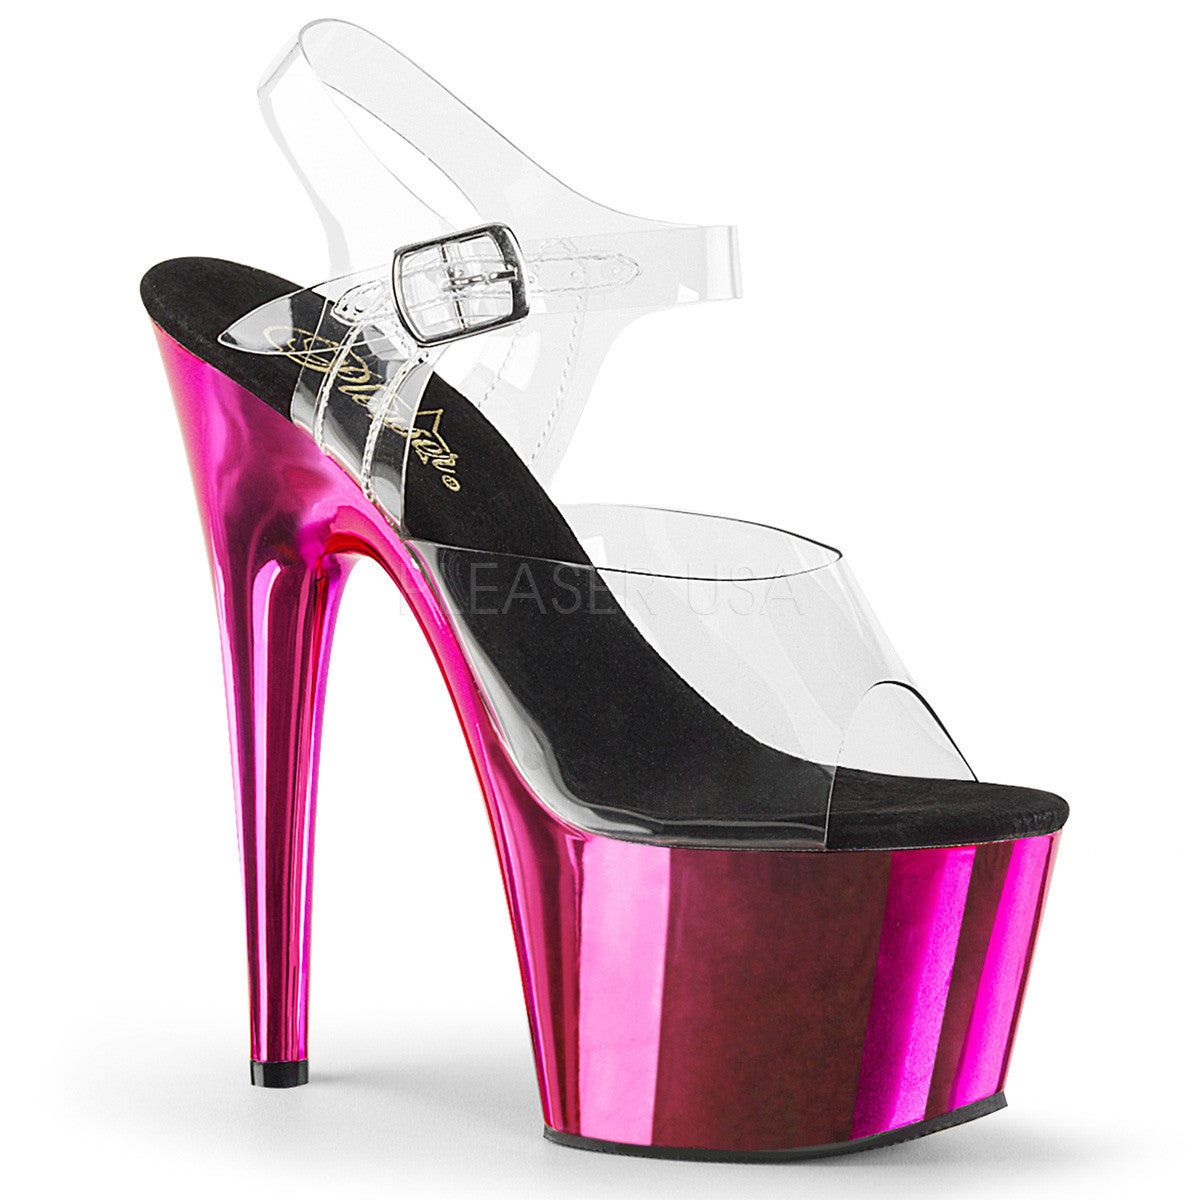 Pleaser ADORE-708 Hot Pink Chrome Exotic Dancing Sandals - Shoecup.com - 1